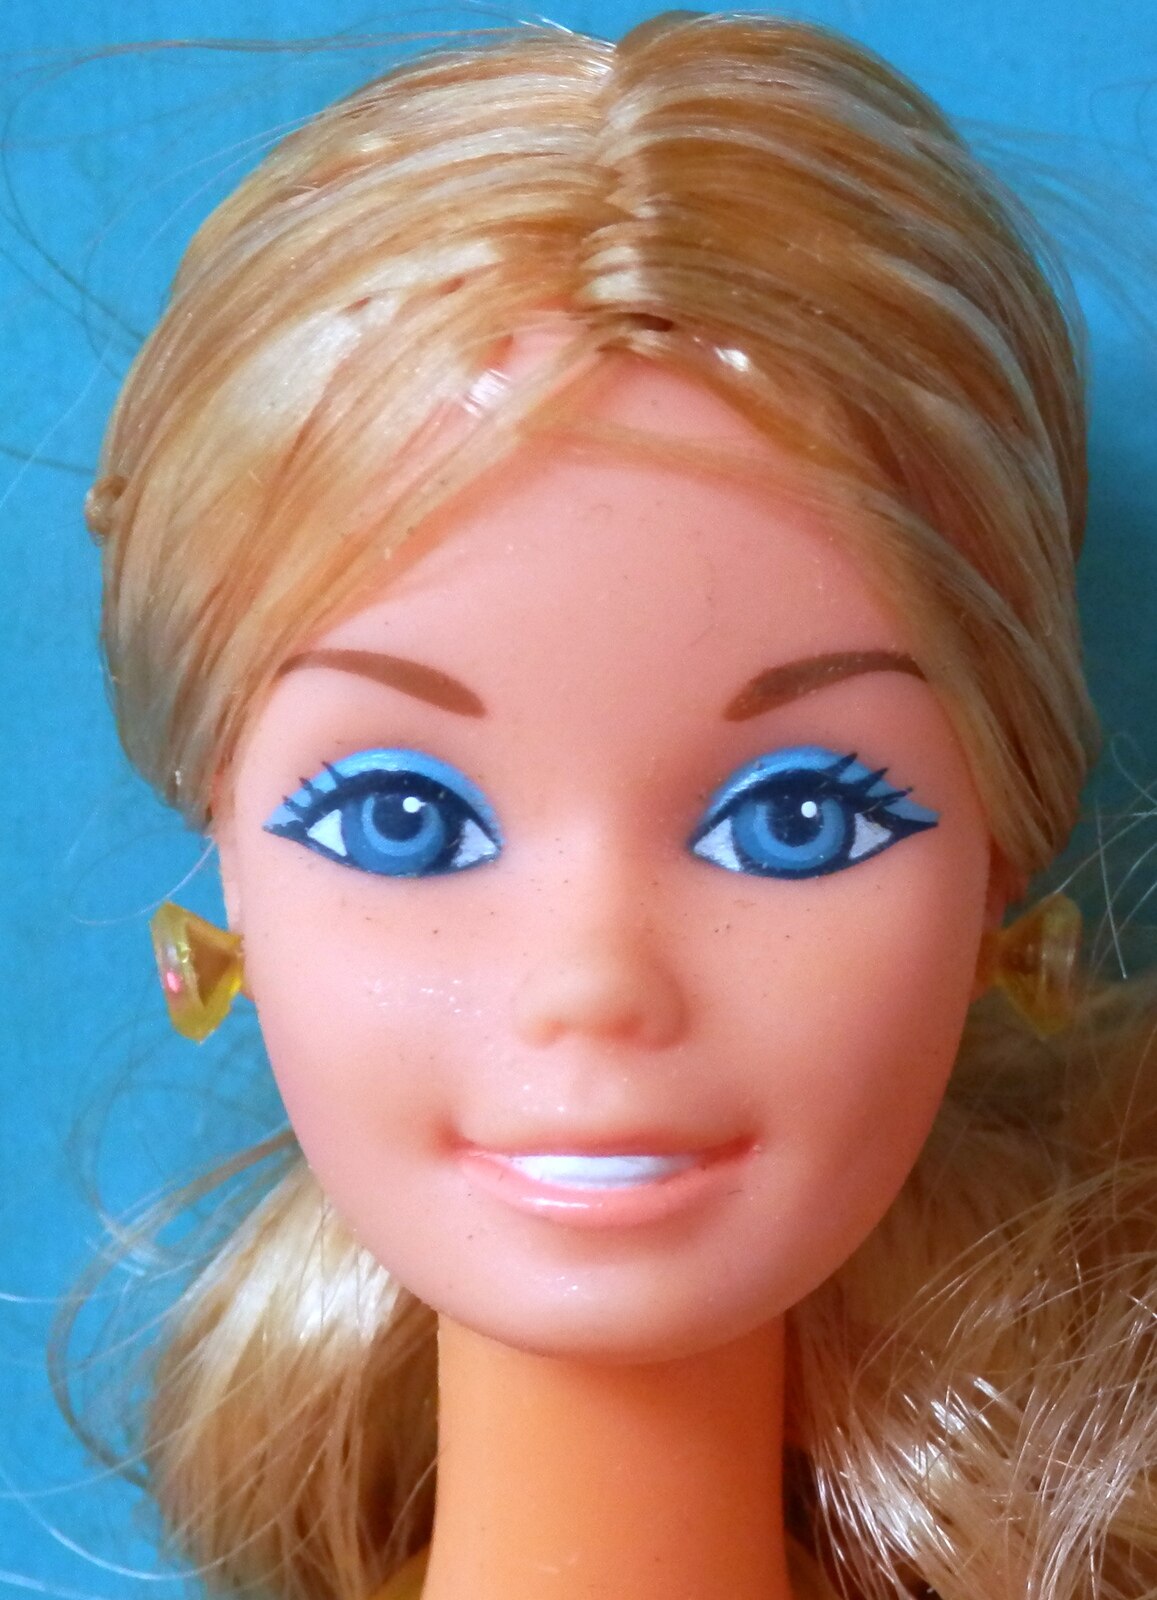 ★SUPER STAR　Barbie　か　すてきなバービー？